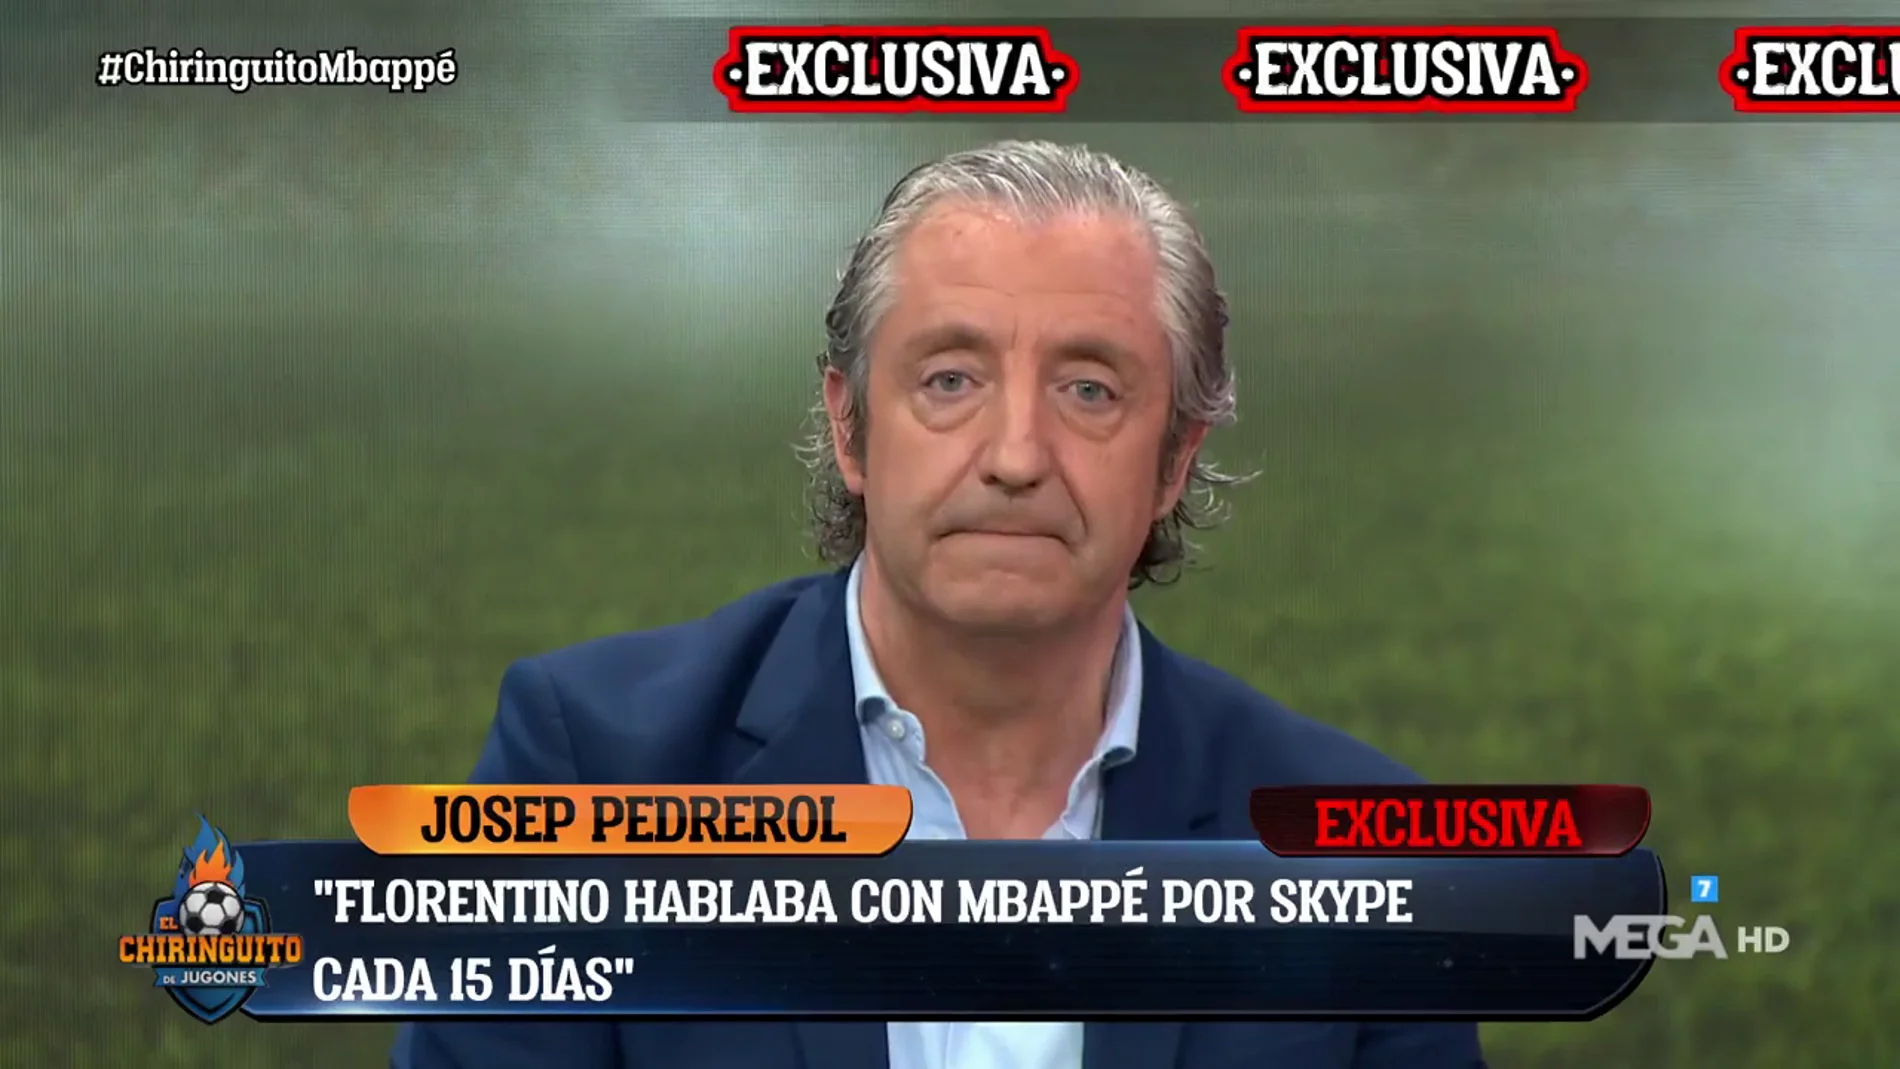 Josep Pedrerol: "Florentino hablaba por Skype con Mbappé cada 15 días"